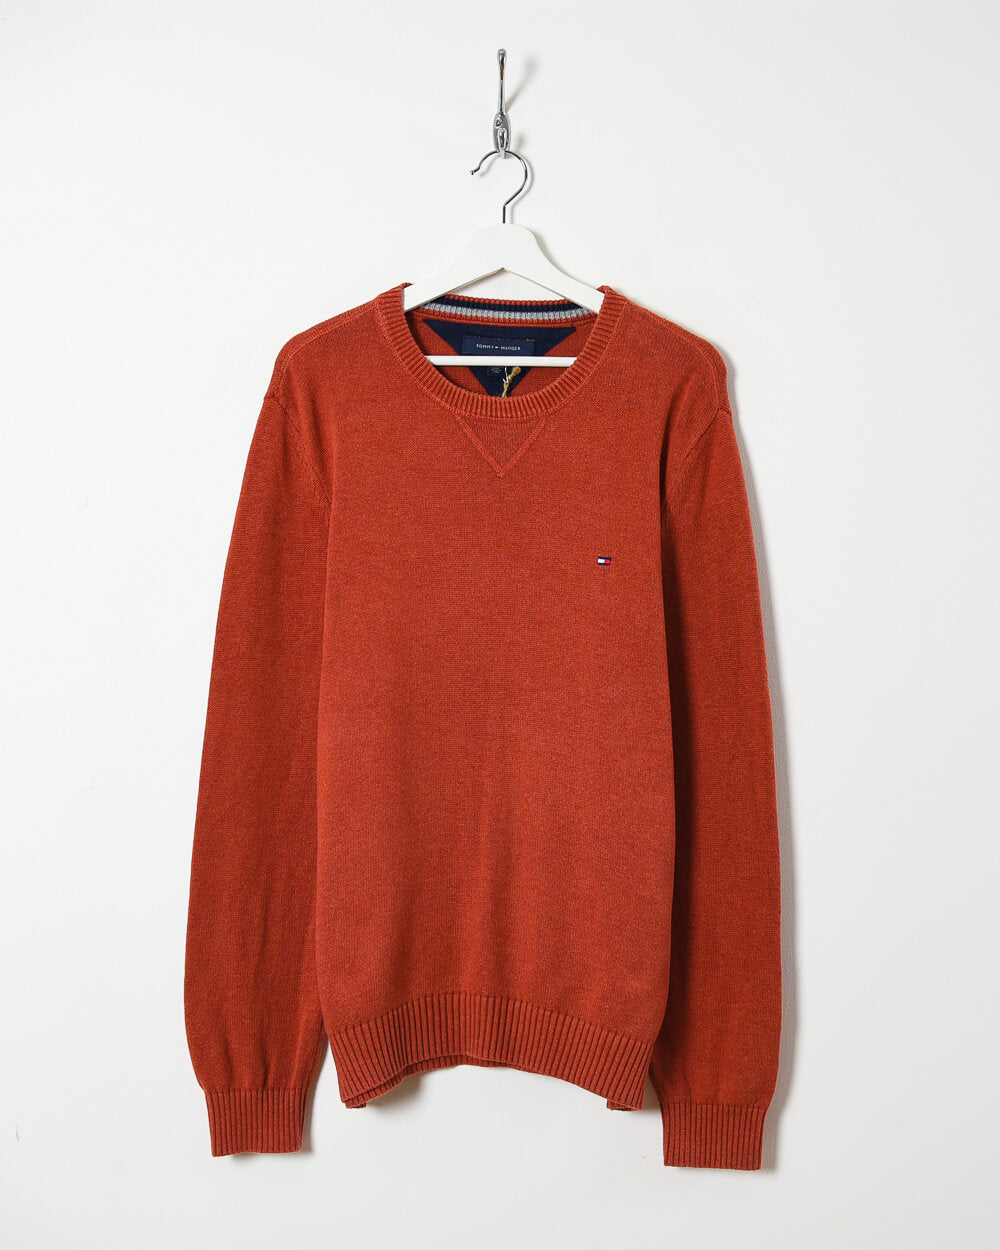 Orange Tommy Hilfiger Knitted Sweatshirt - Large